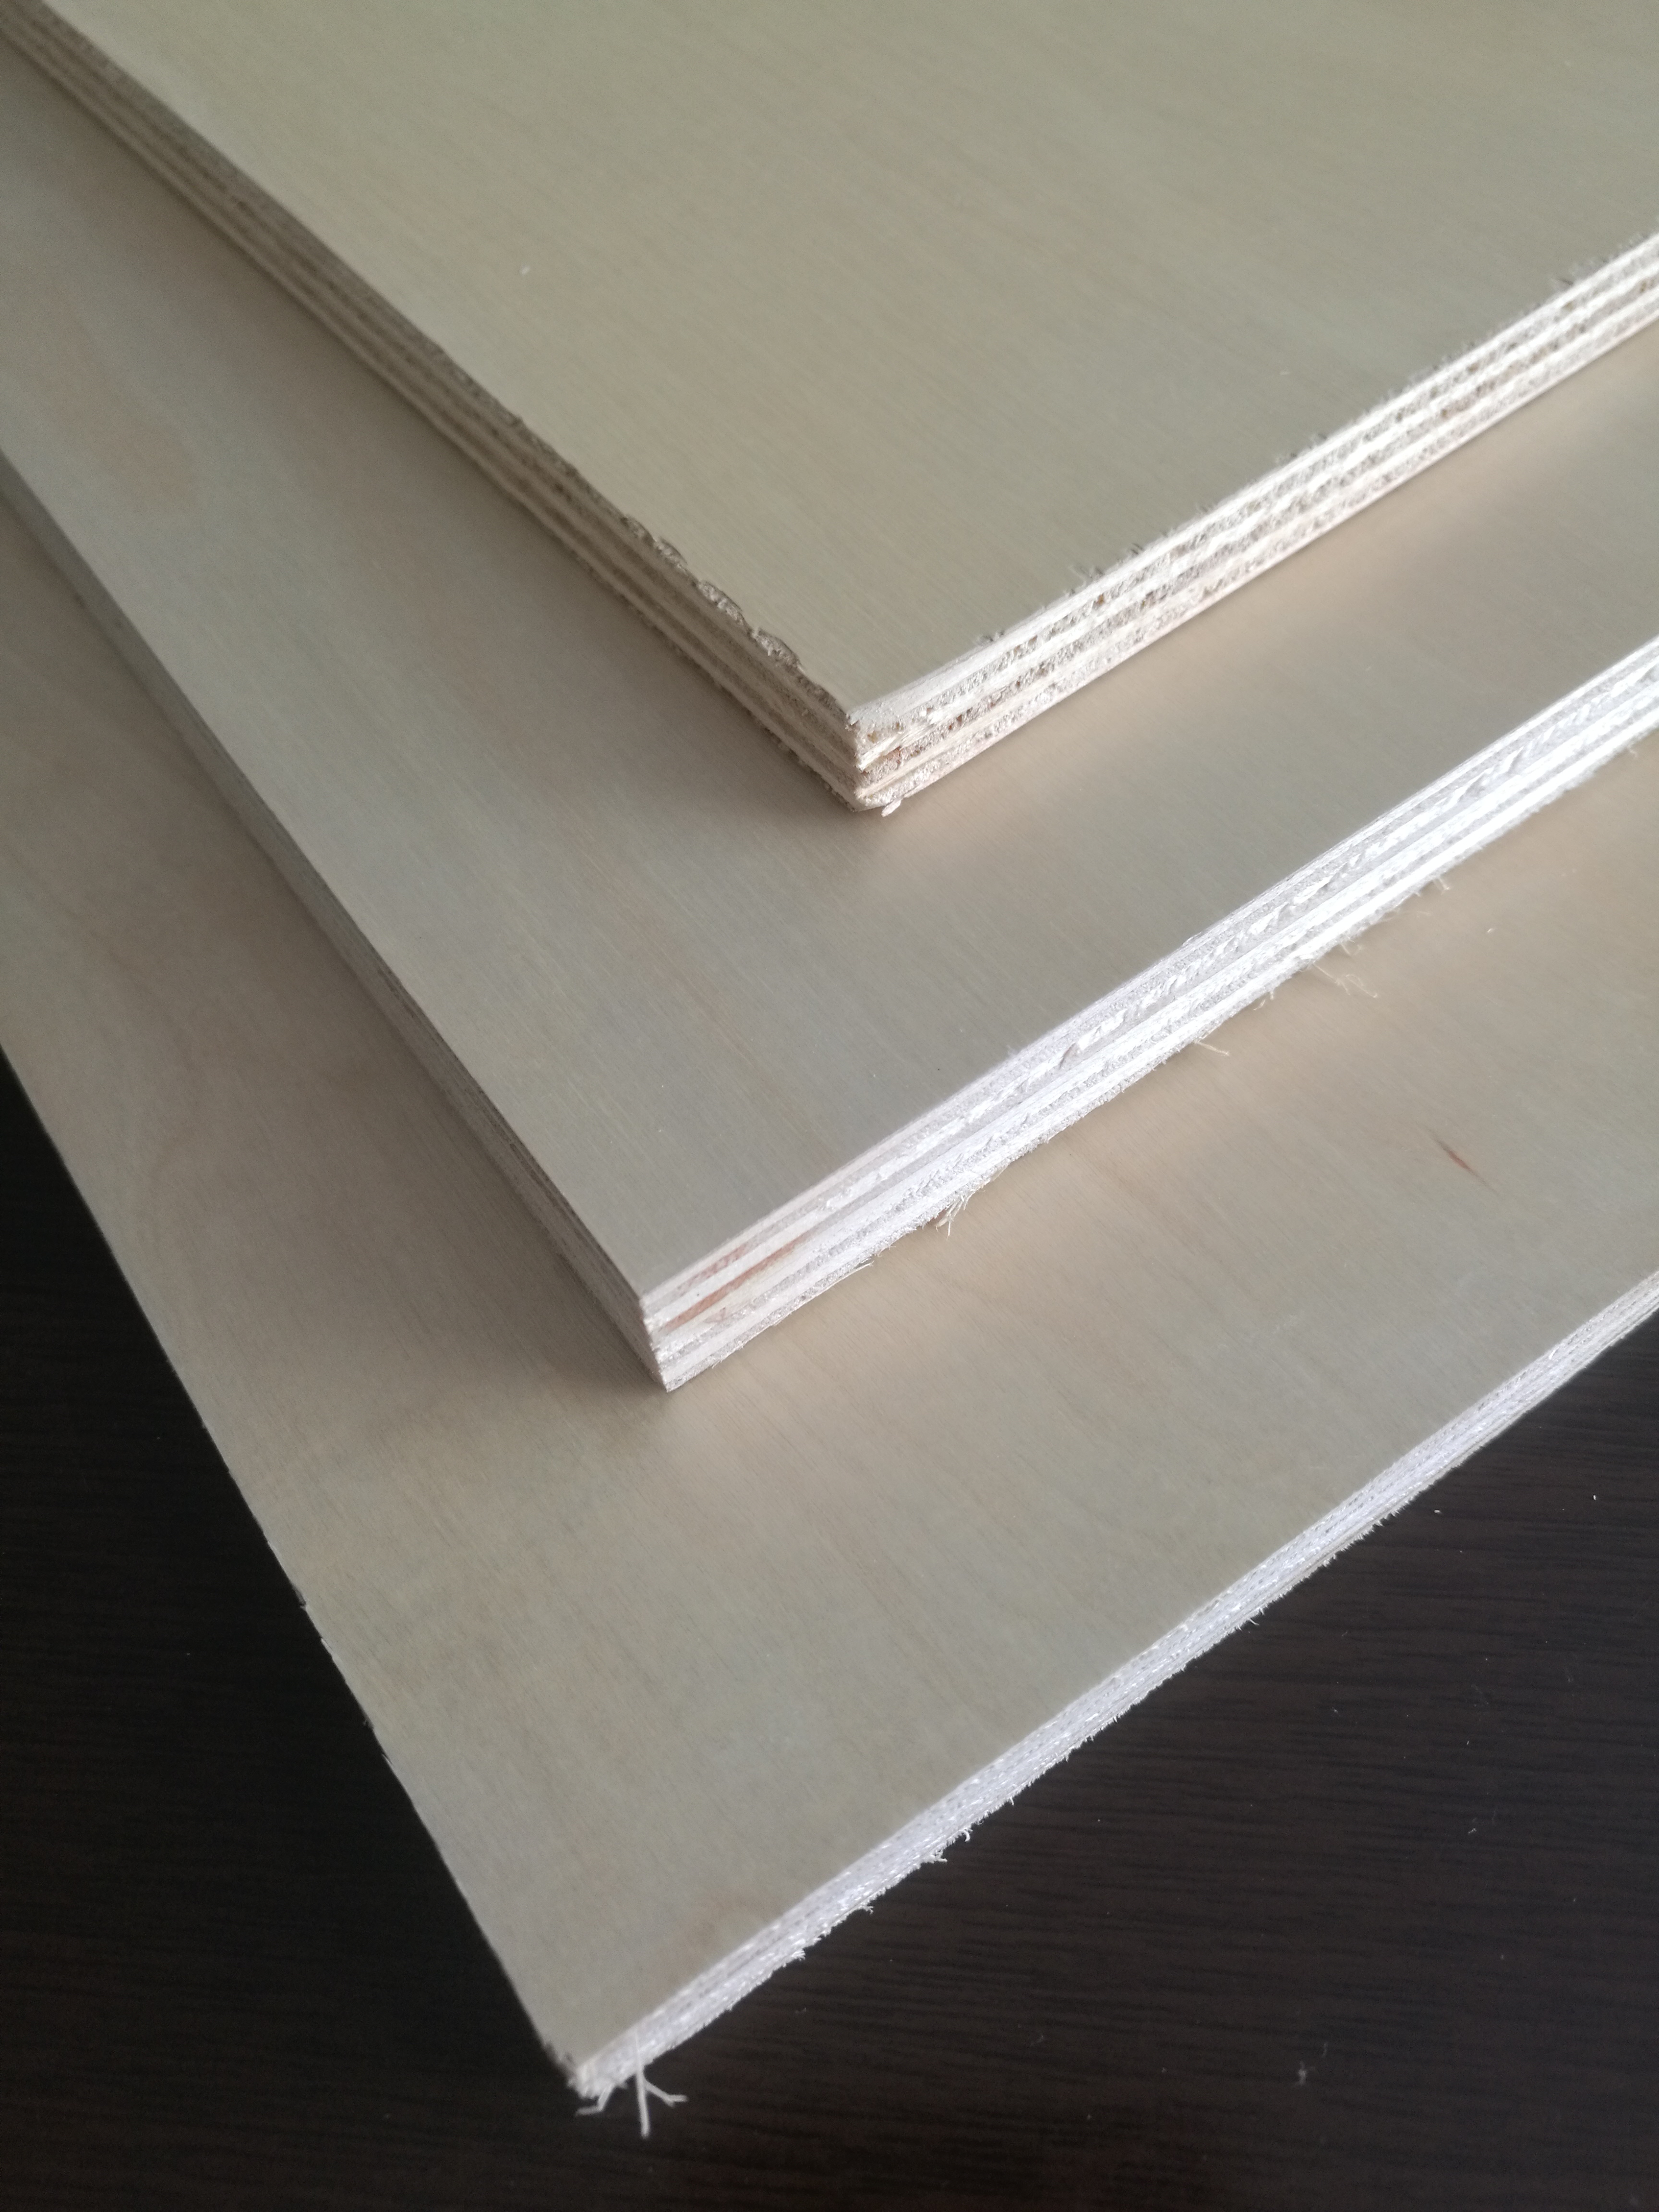 UV coated birch plywood